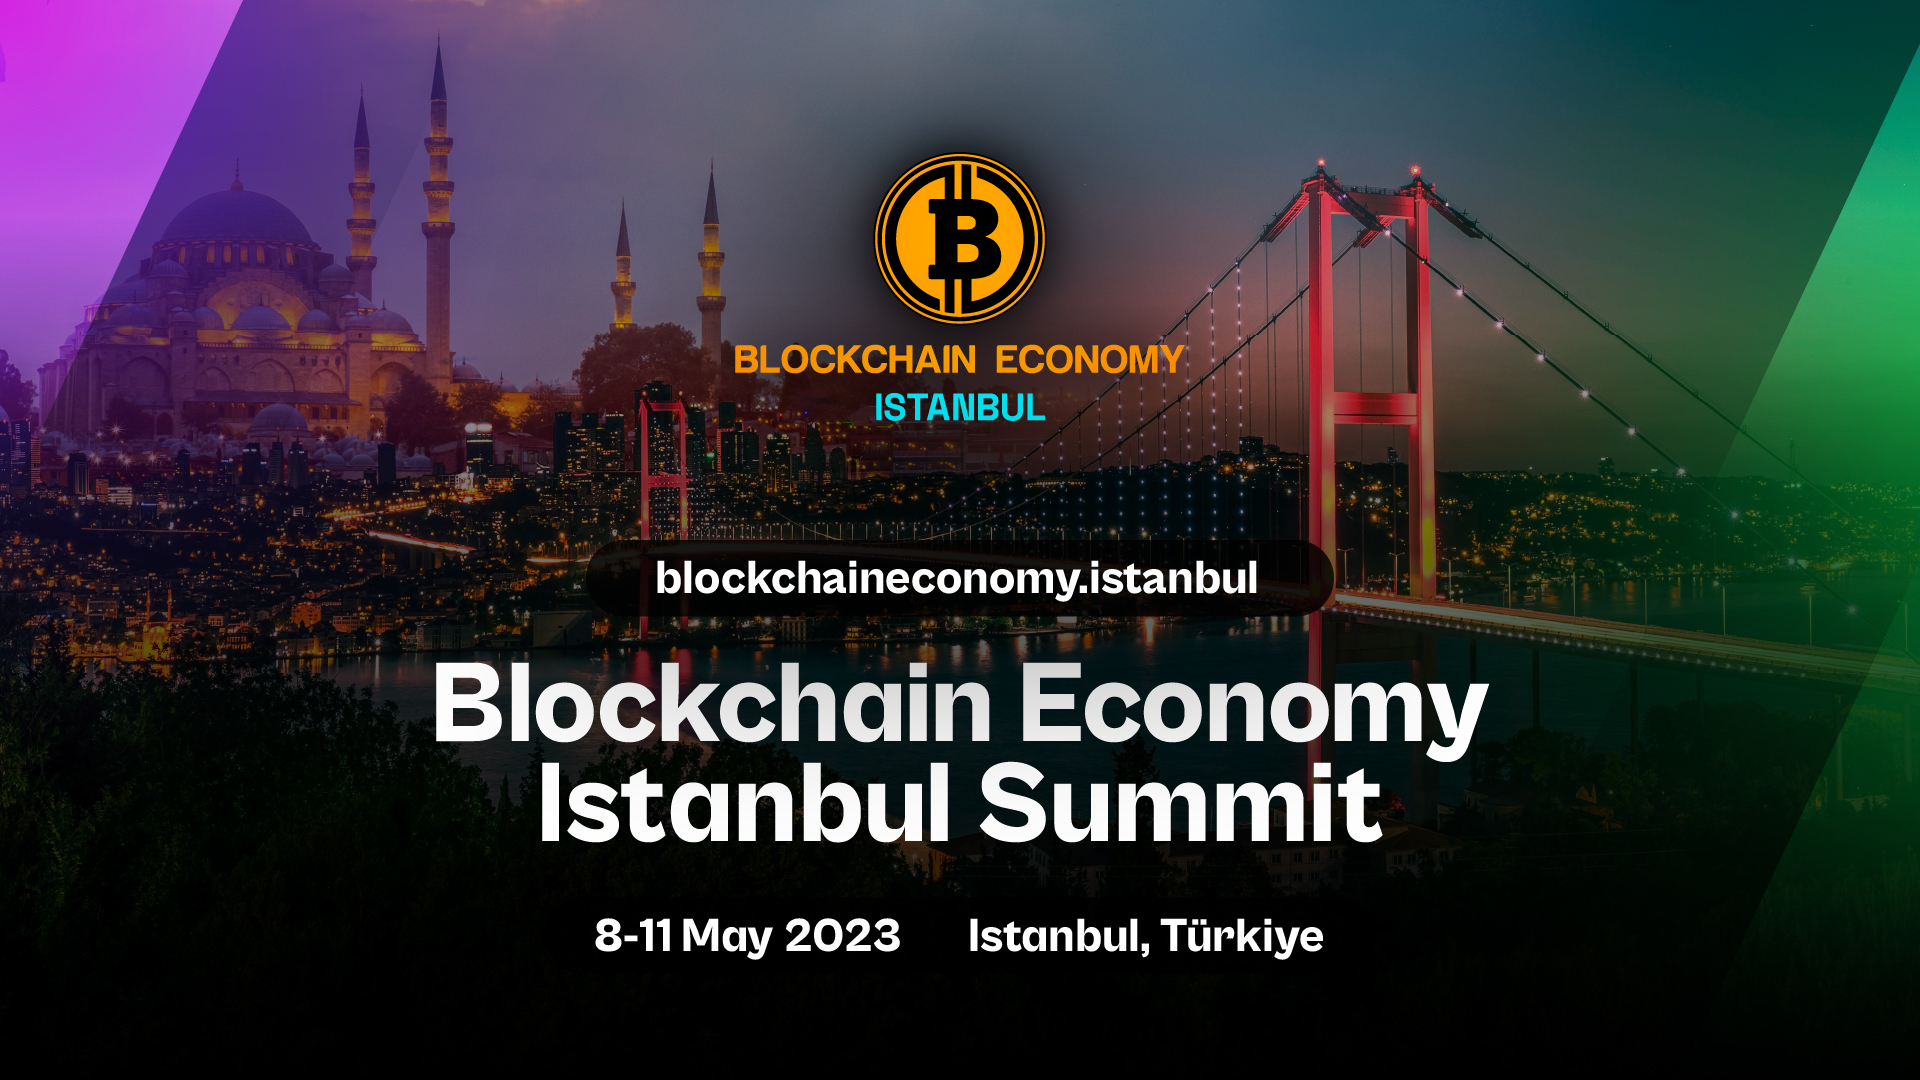 Blockchain Economy, Tuesday, March 28, 2023, Press release picture